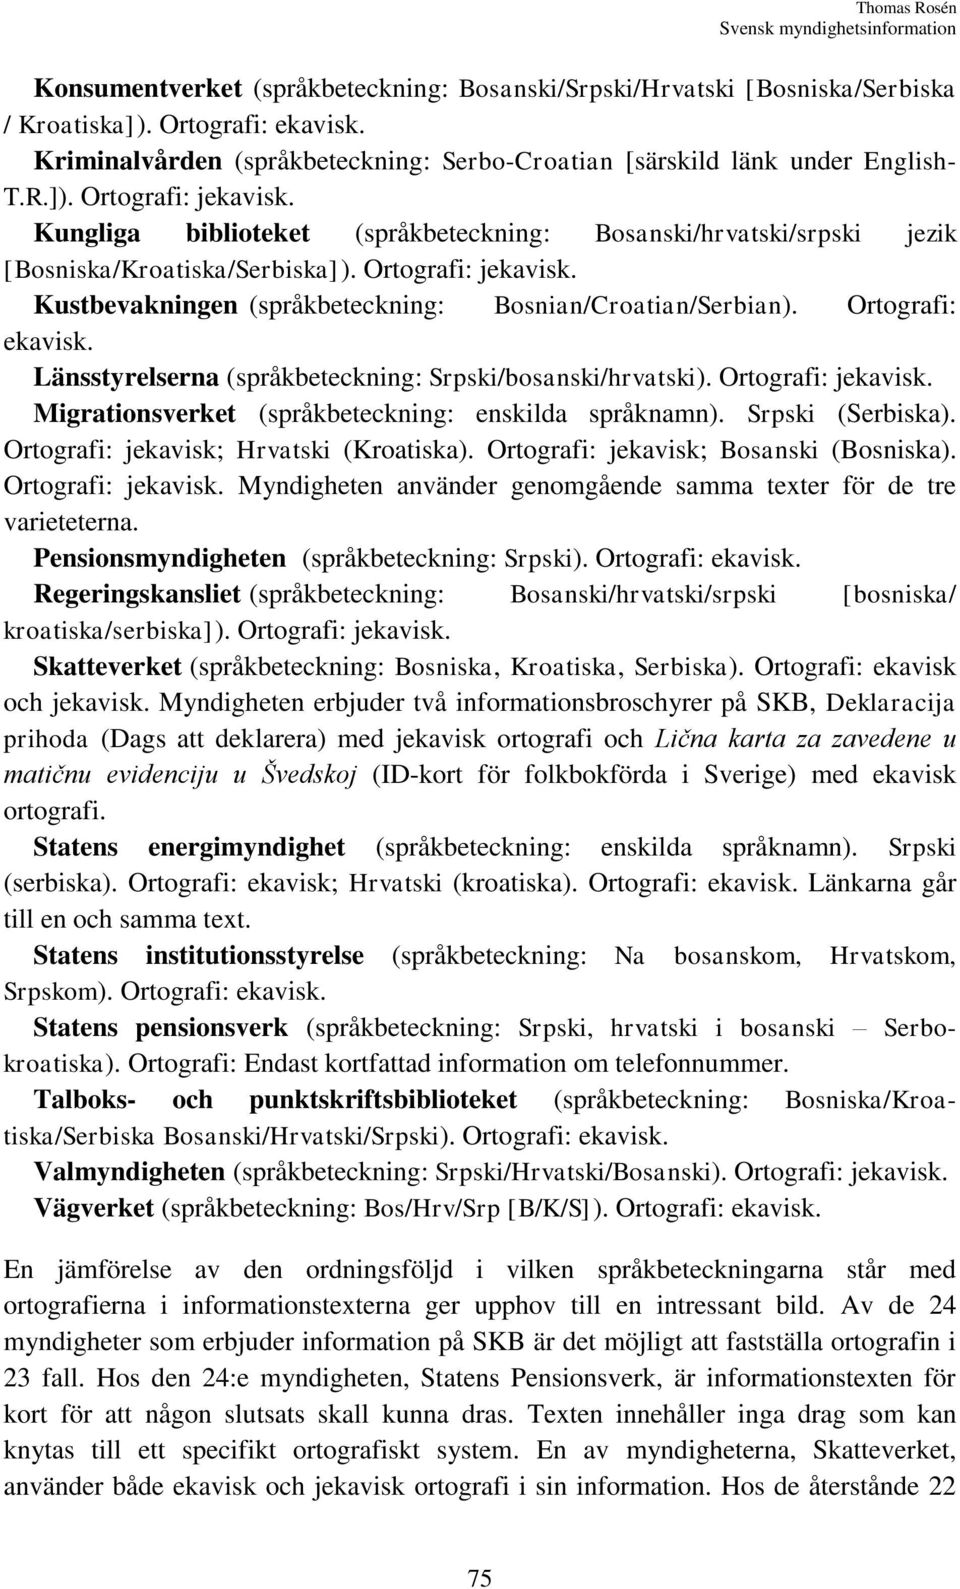 Kungliga biblioteket (språkbeteckning: Bosanski/hrvatski/srpski jezik [Bosniska/Kroatiska/Serbiska]). Ortografi: jekavisk. Kustbevakningen (språkbeteckning: Bosnian/Croatian/Serbian).